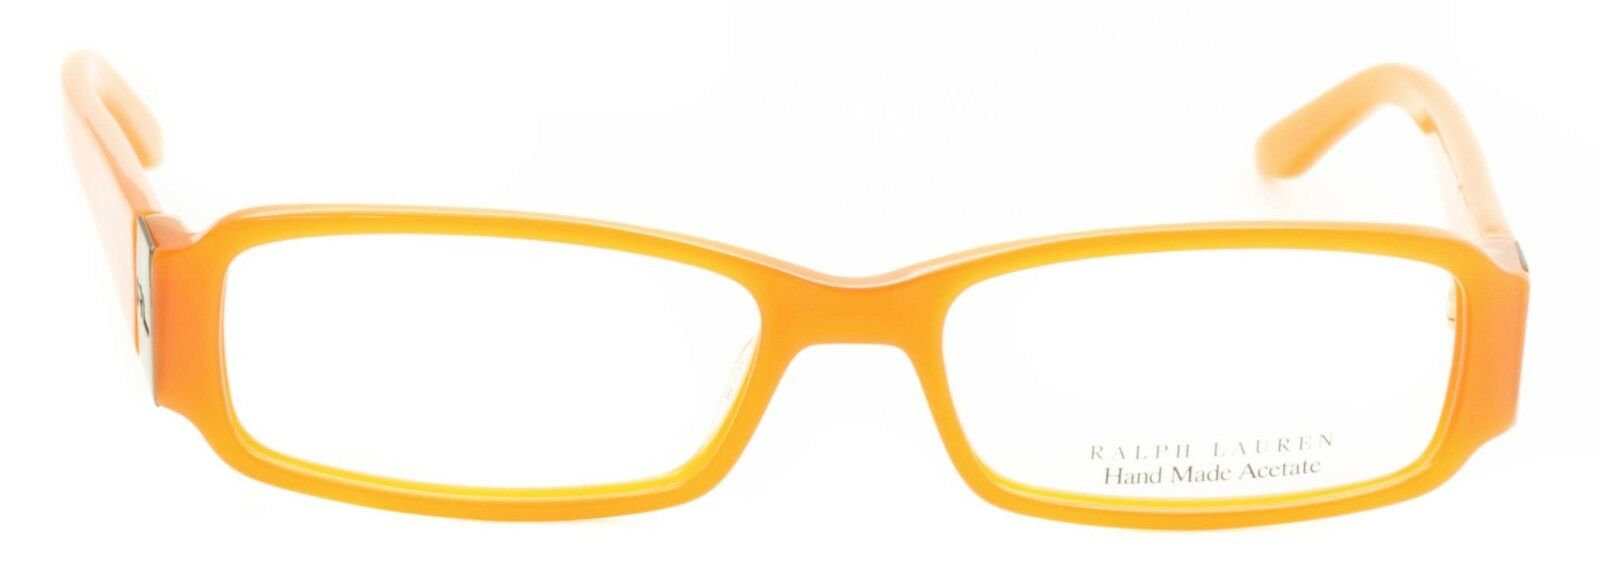 RALPH LAUREN RL 1468 093 Orange Eyewear FRAMES RX Optical Eyeglasses Glasses-New